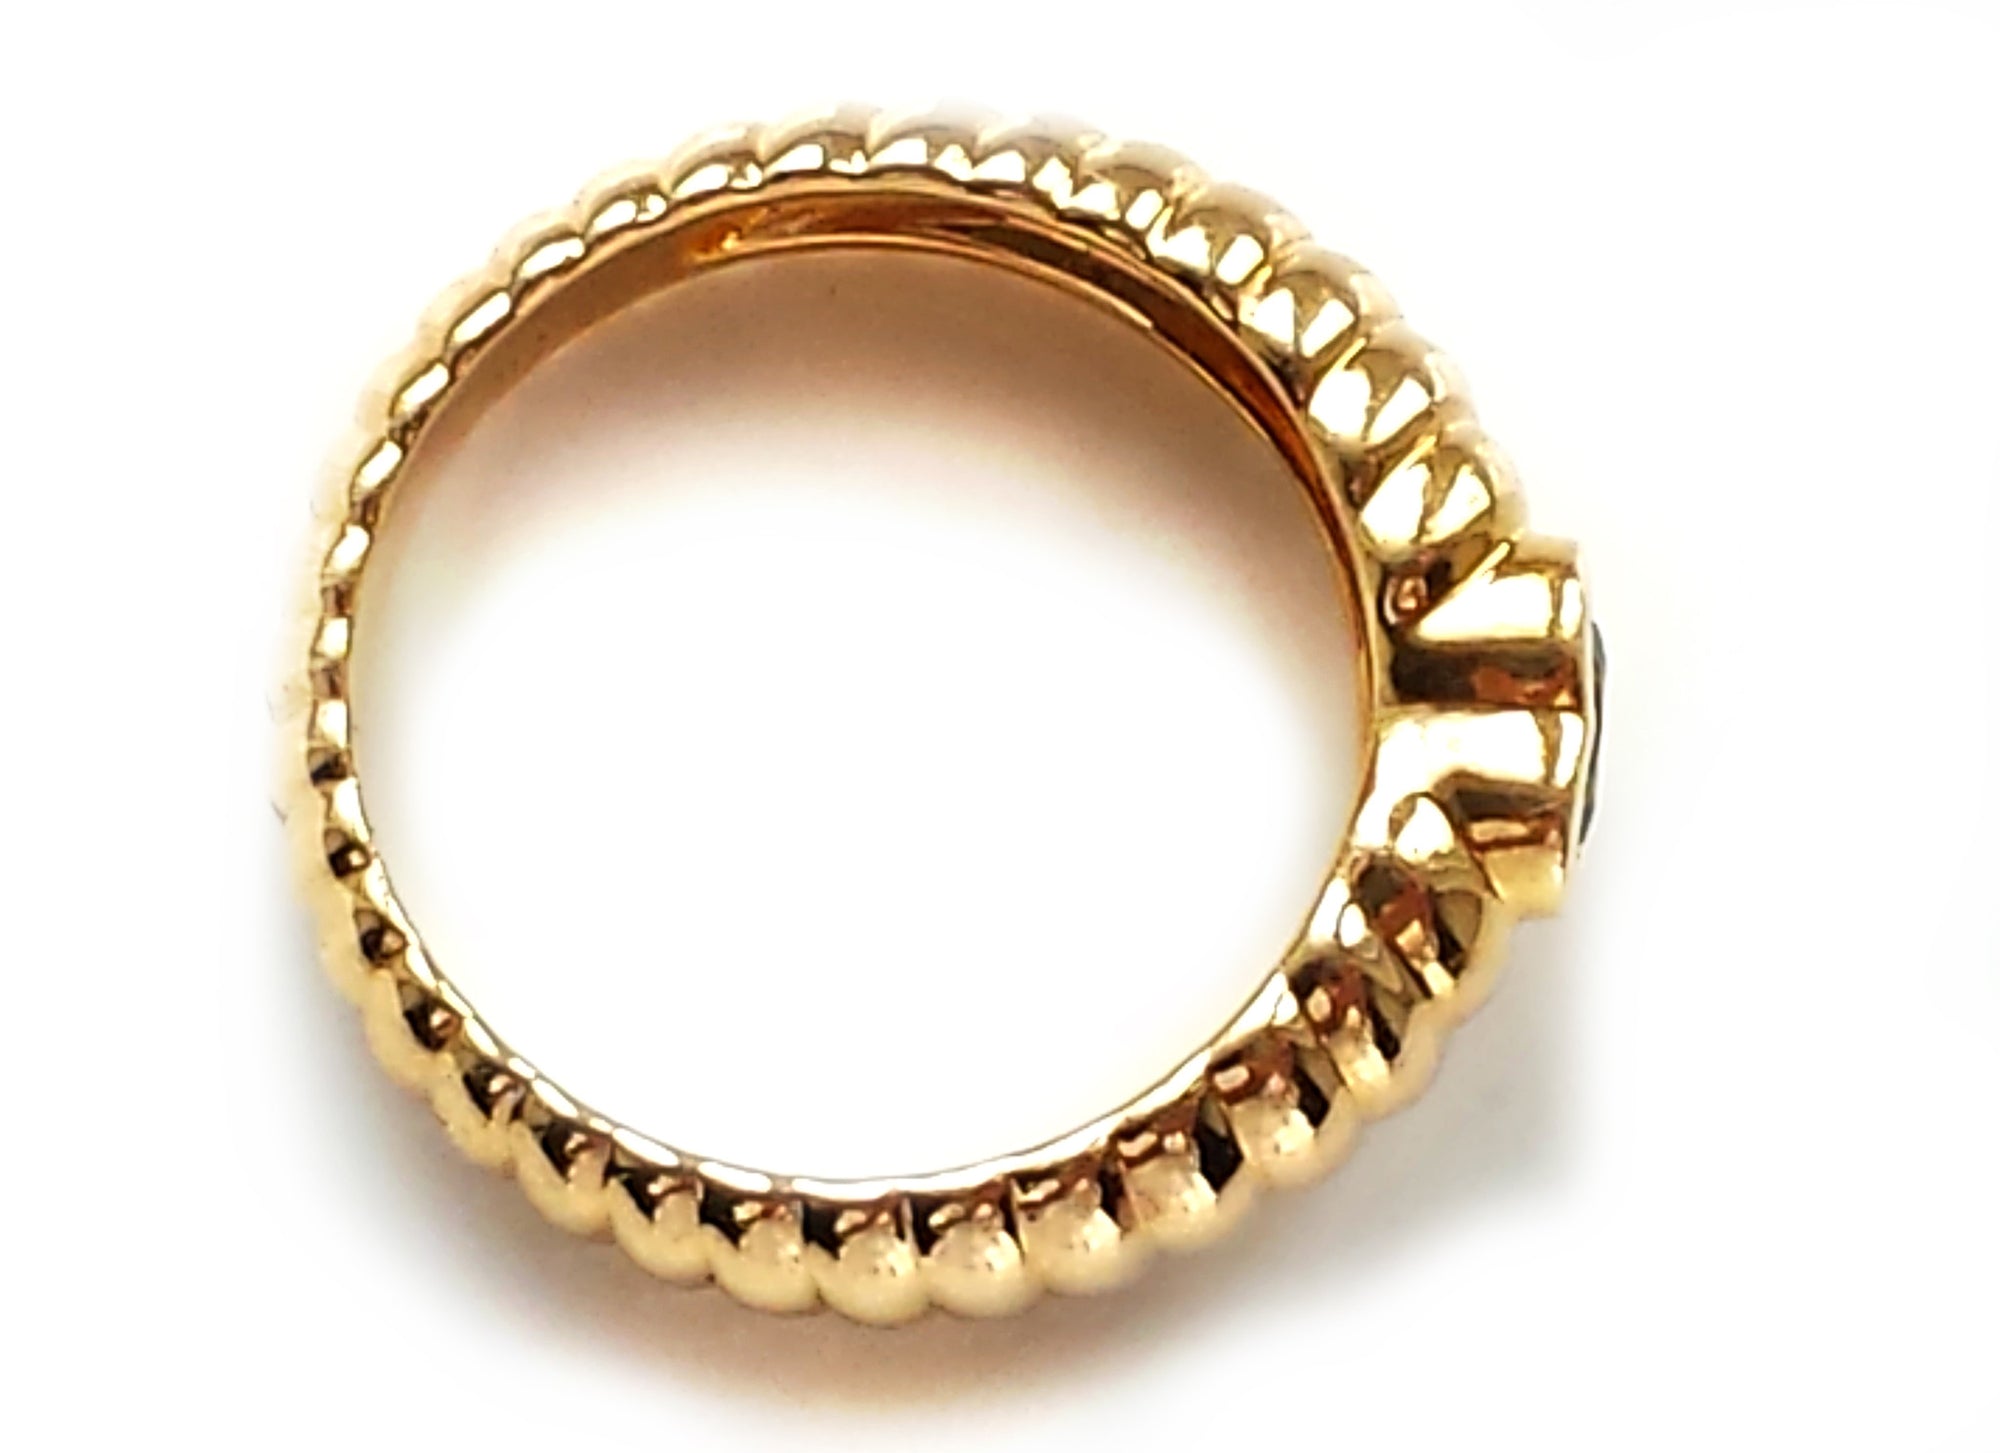 Tiffany & Co. Vintage Heart-Shaped Peridot Ring in 18k Yellow Gold